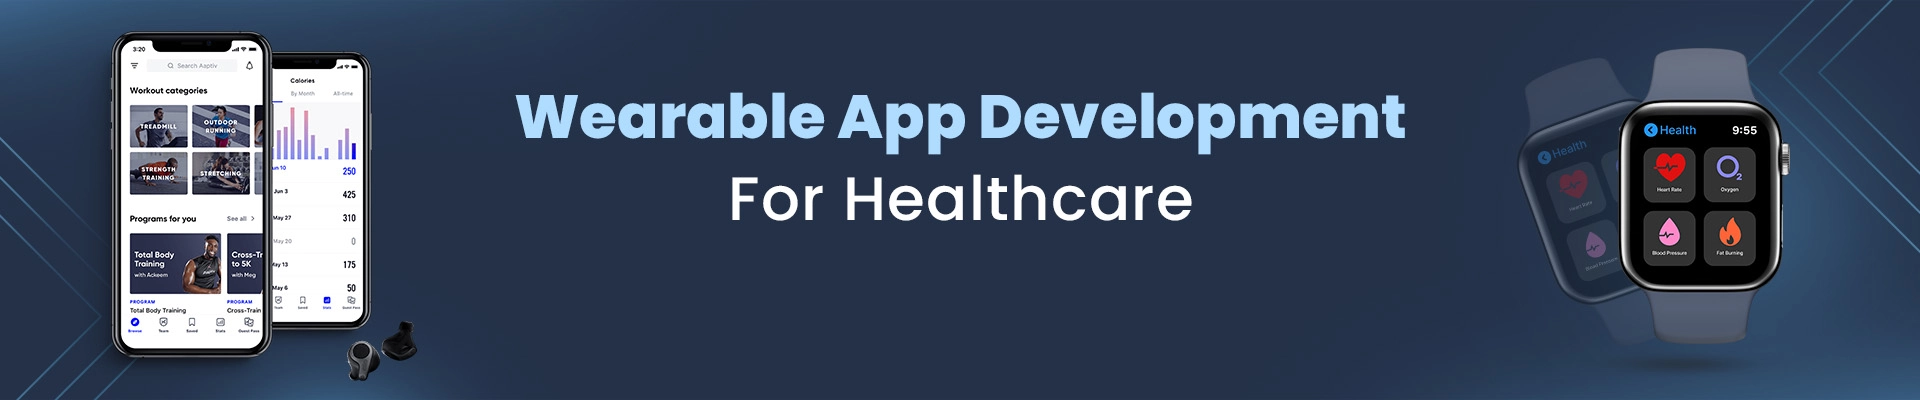 Wearable App Development For Healthcare